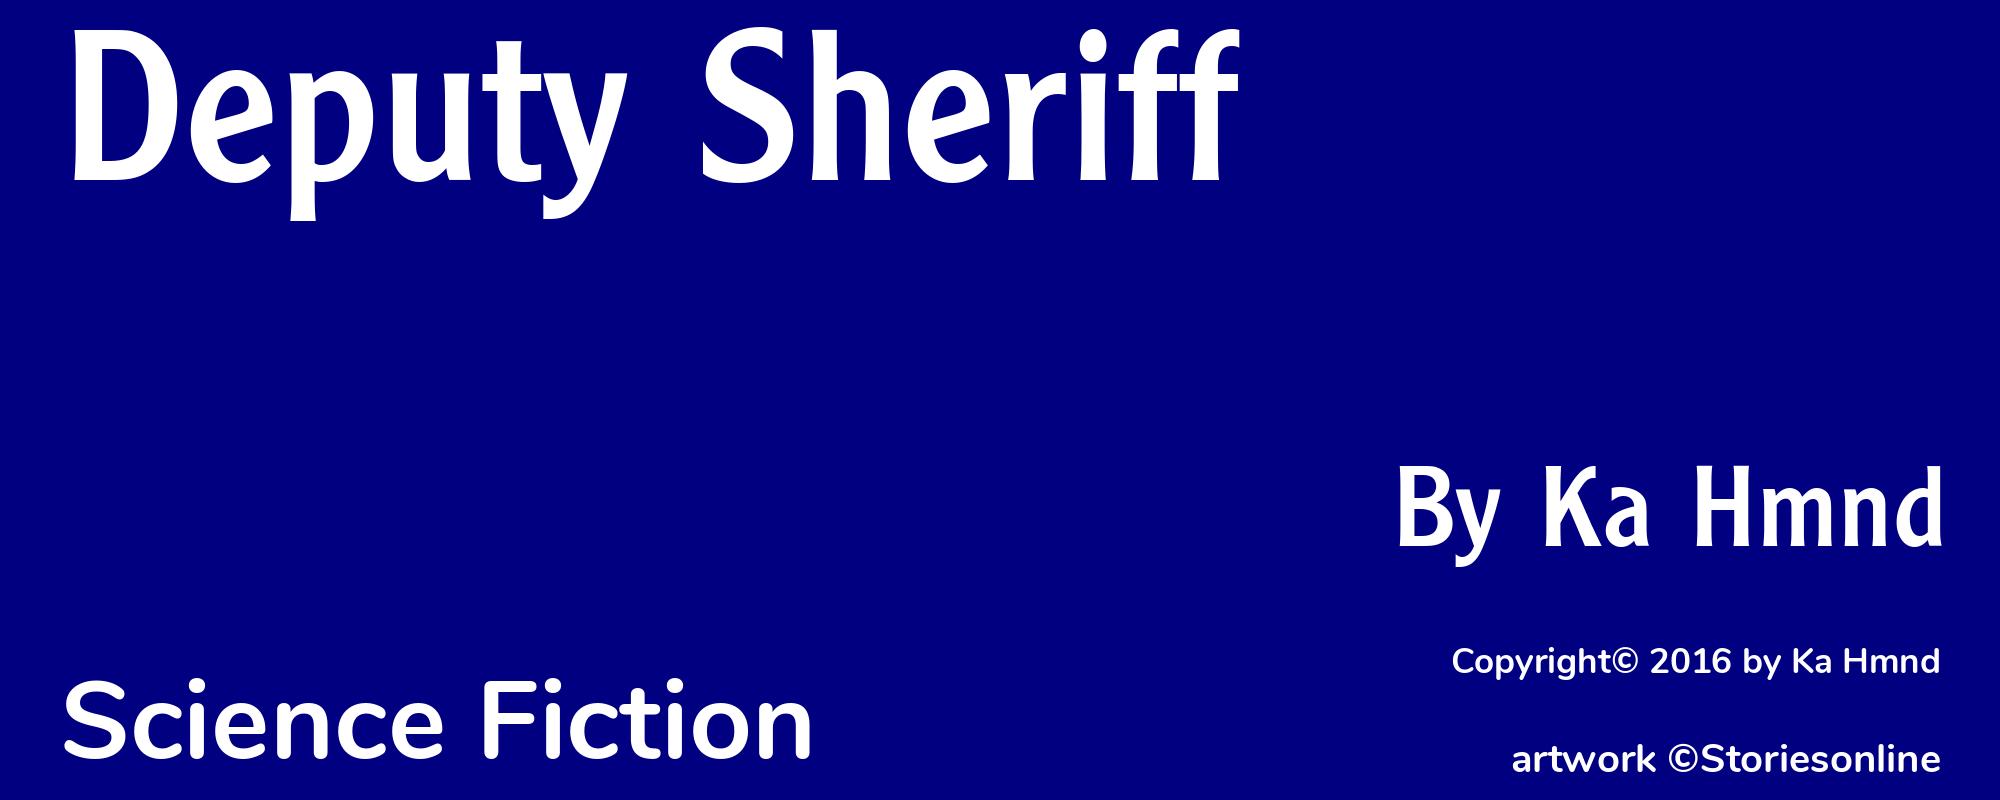 Deputy Sheriff - Cover